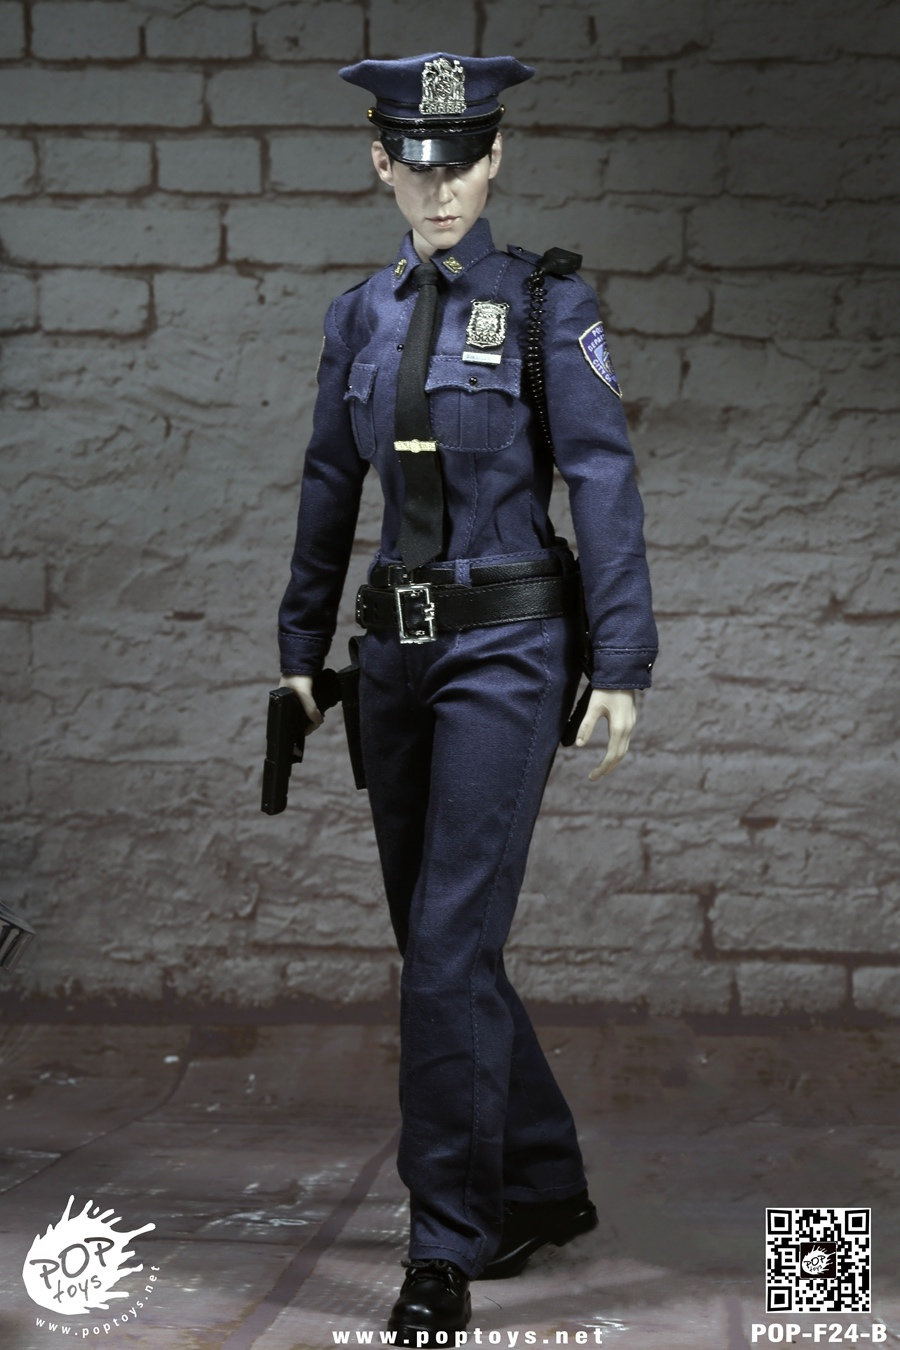 POPTOYS - NYPD POLICEWOMAN (F24) 8czk